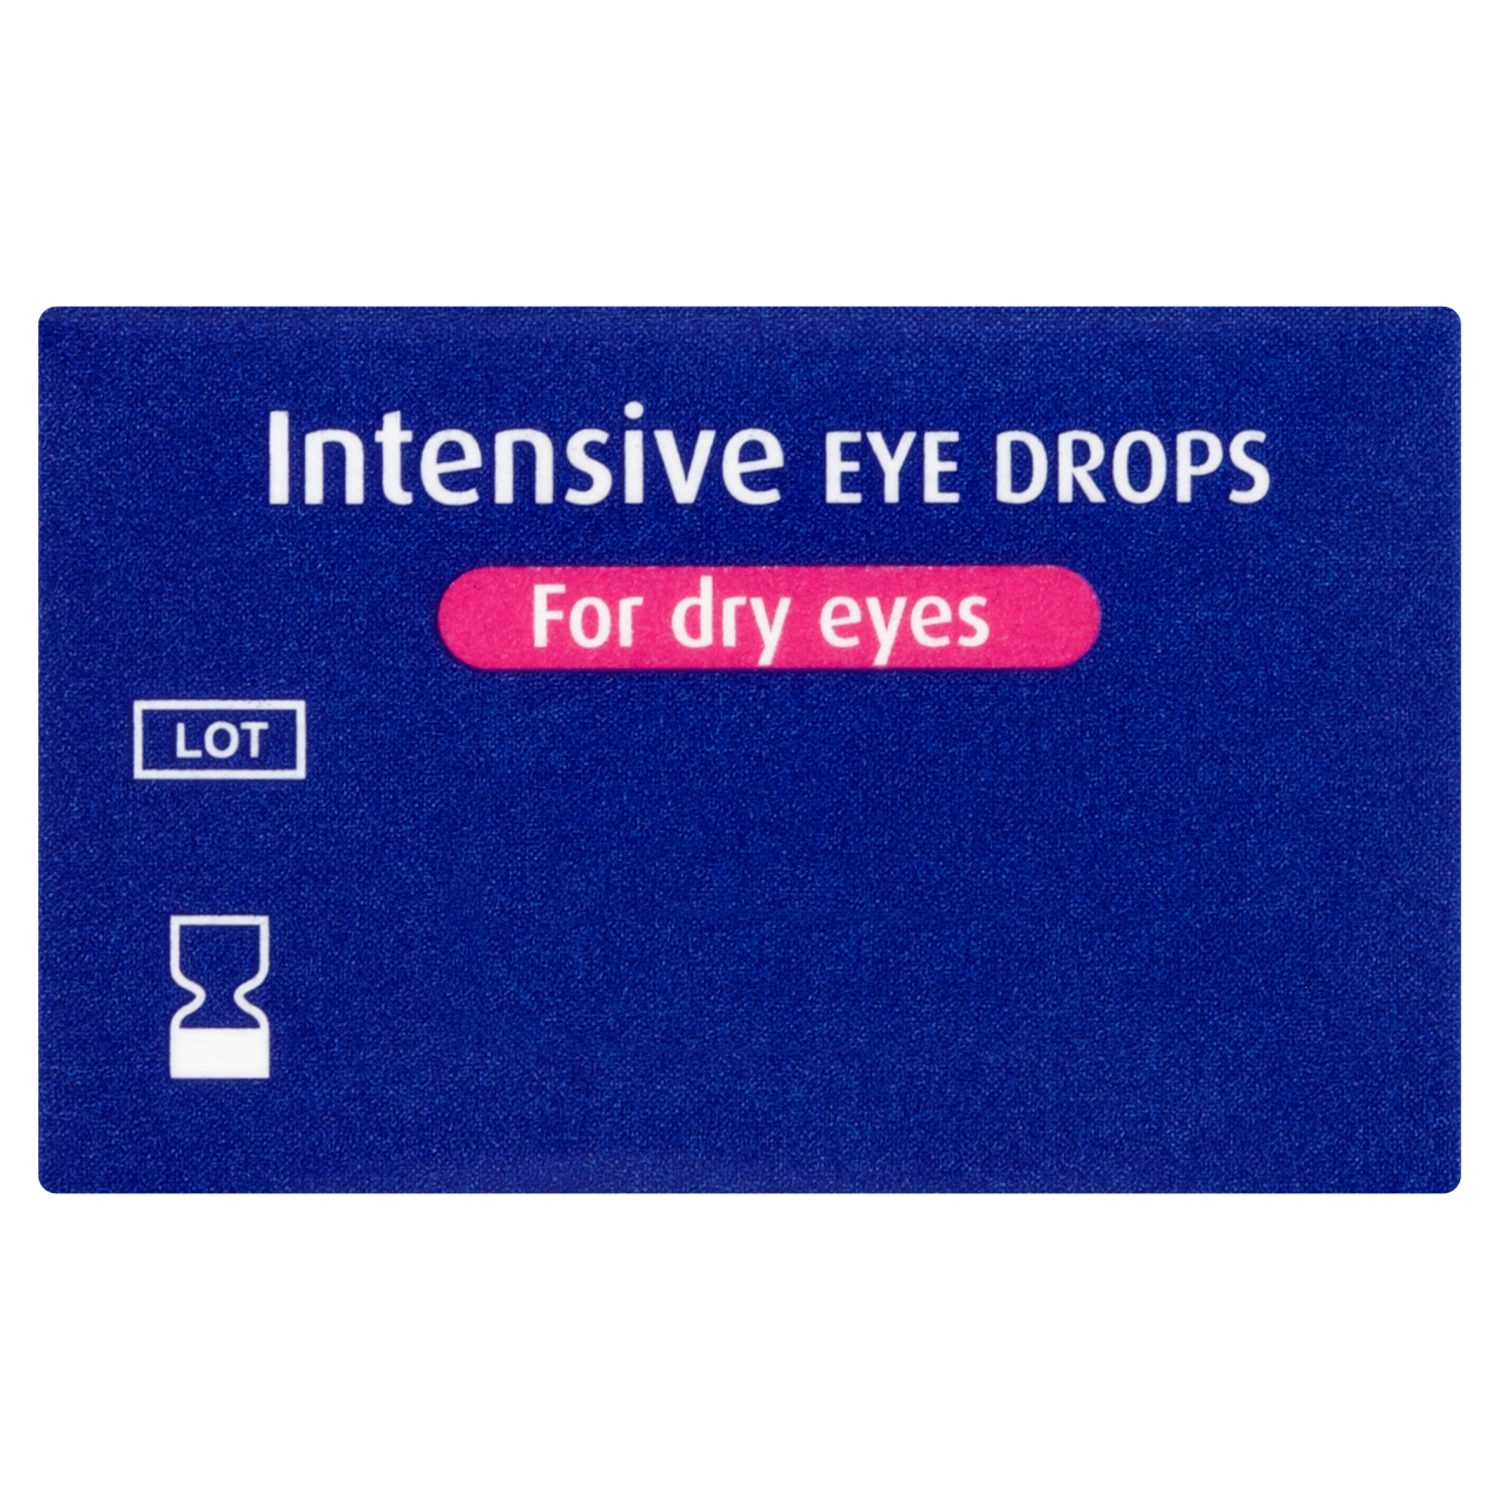 Optrex Intensive Eye Drops for Dry Eyes 10ml